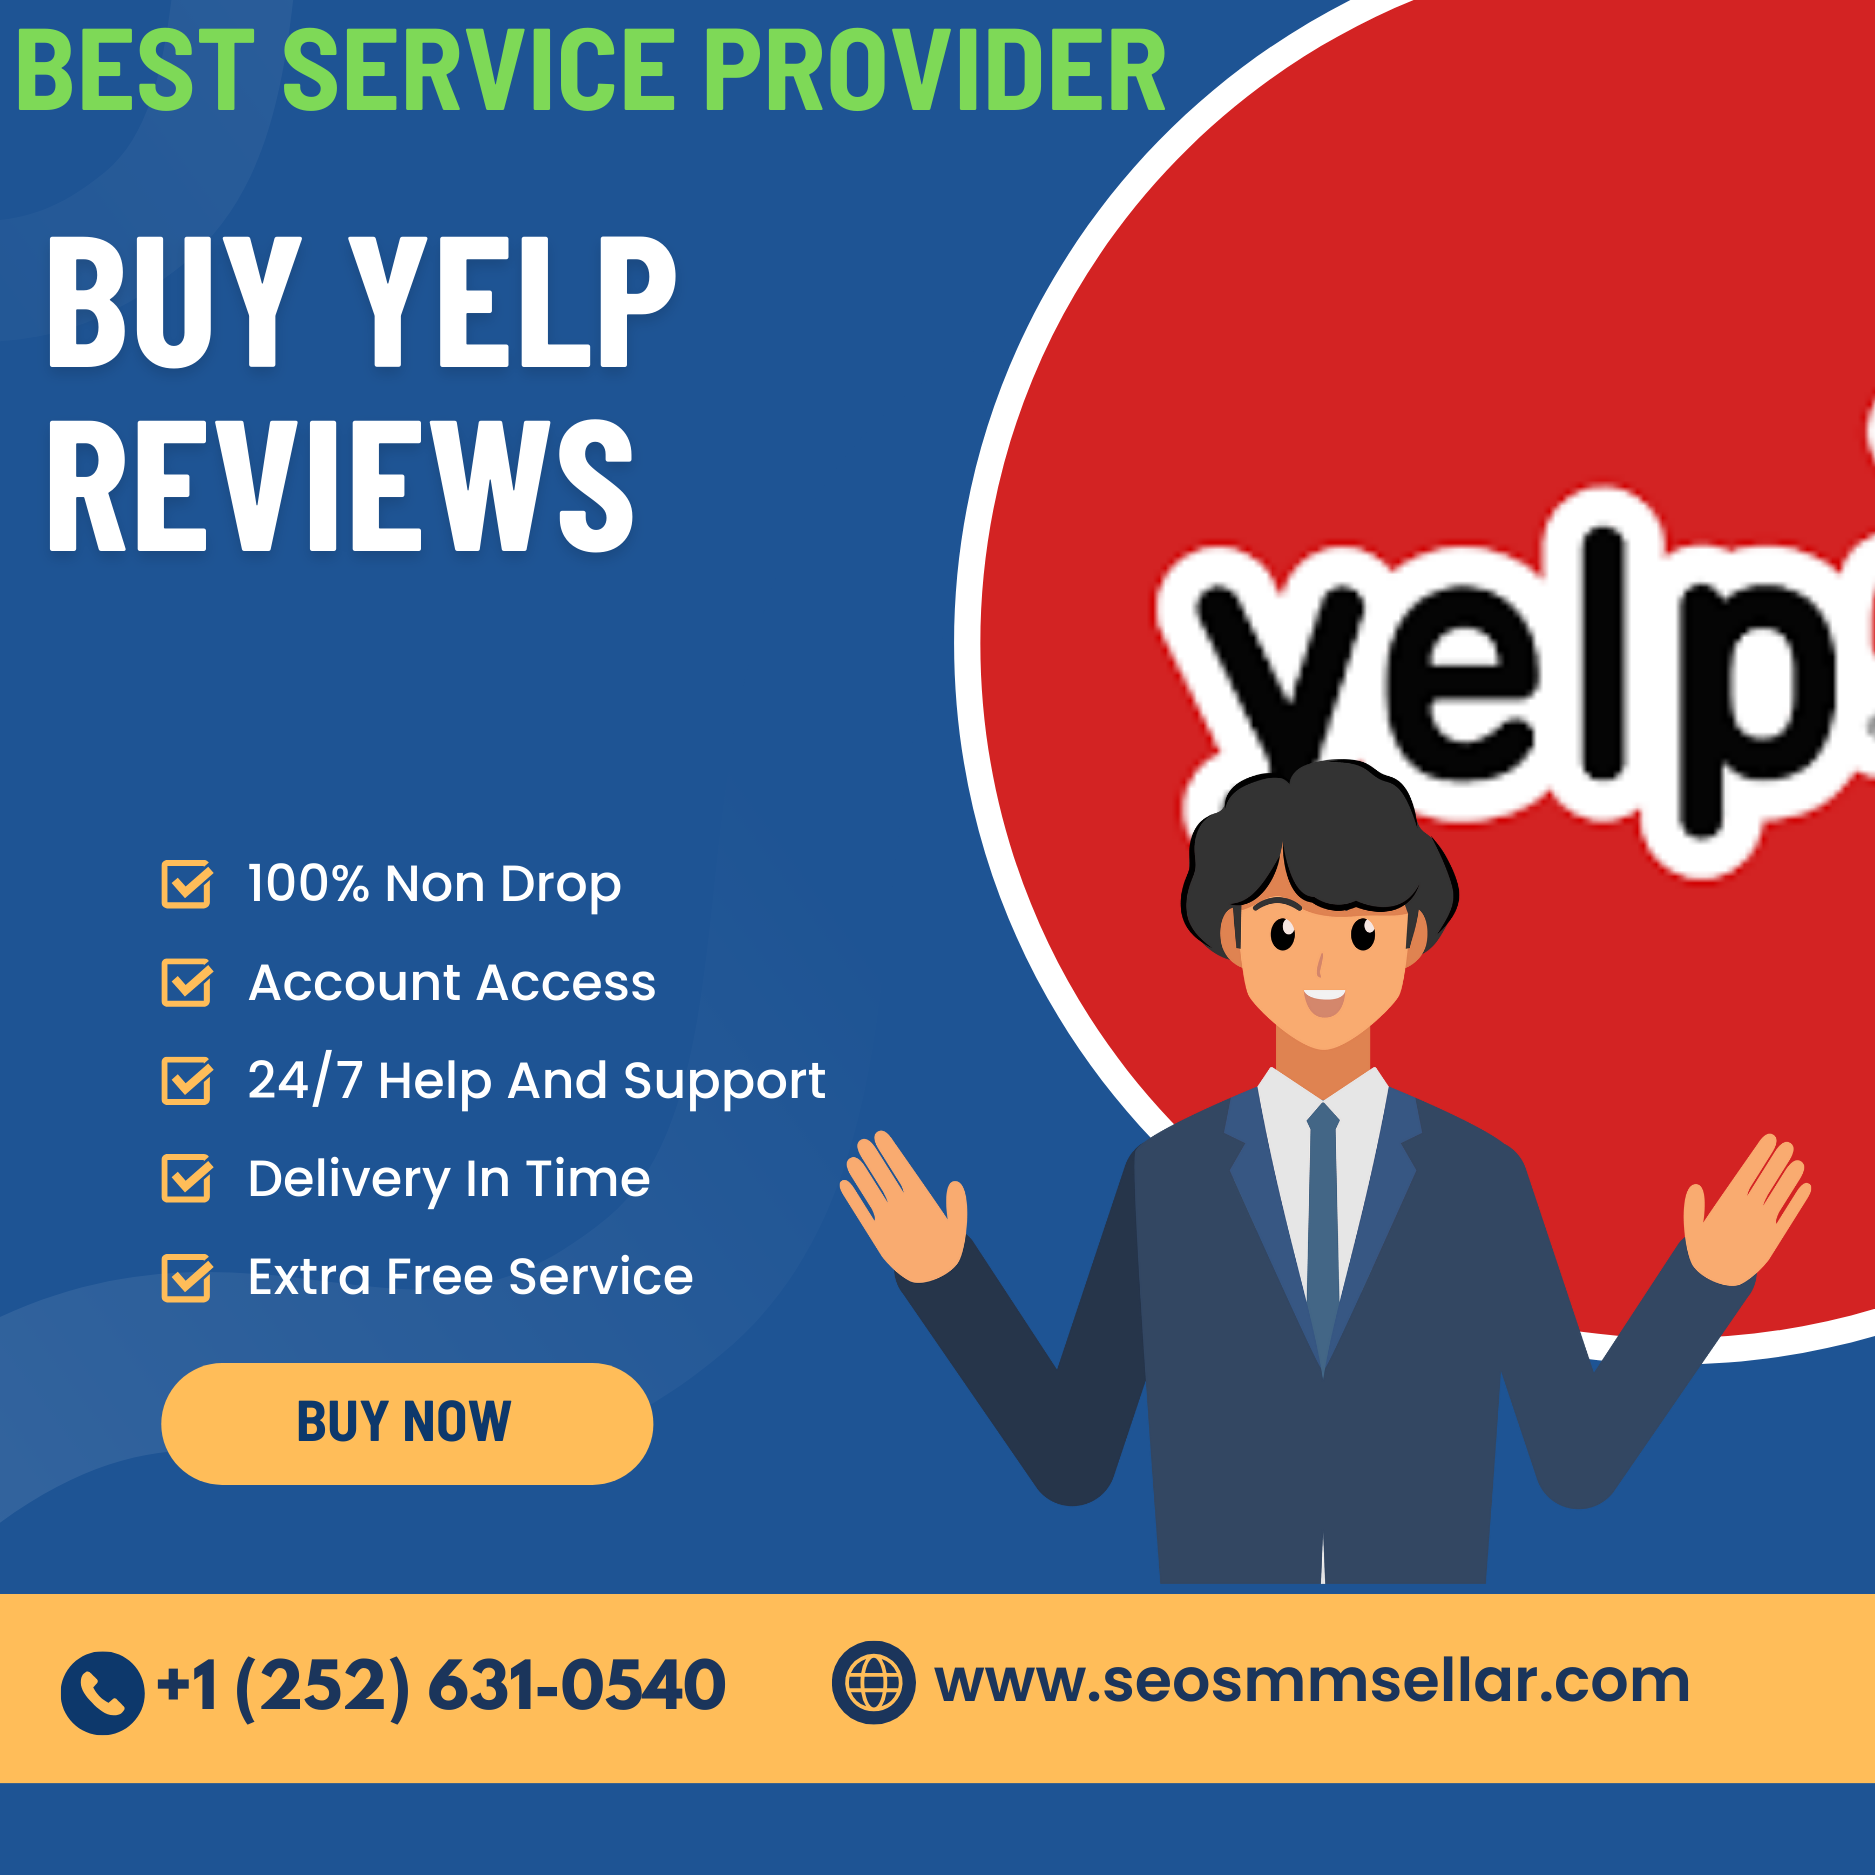 Buy Yelp Reviews - SEO SMM SELLAR